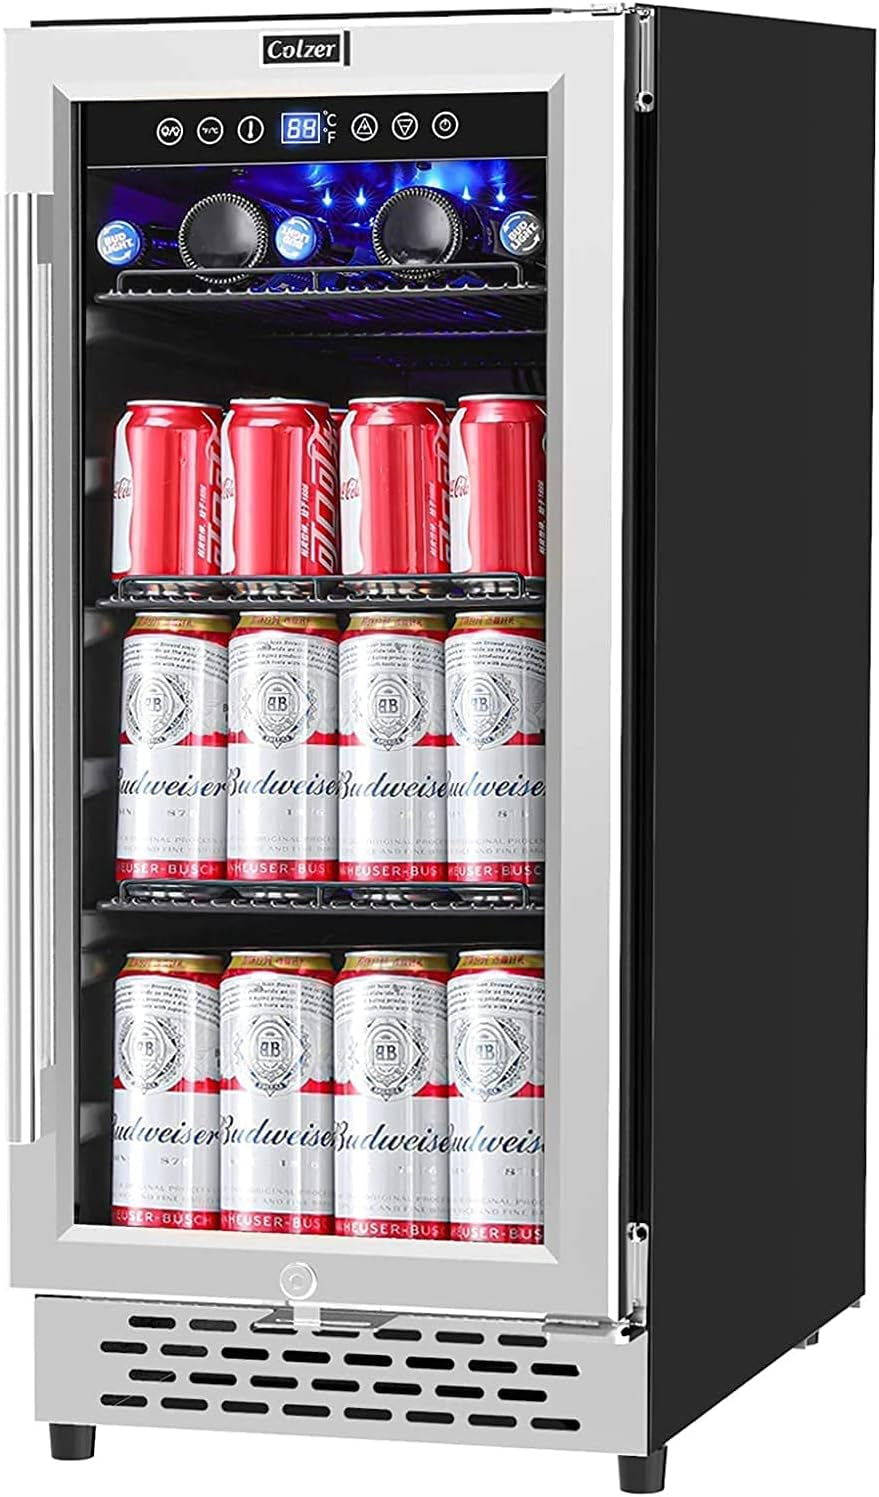 15 Inch Beverage Refrigerator with Glass Door 126 Cans Mini Beverage Cooler under Counter Freestanding Built in Centre Garage Fridge with Lock for Drink Beer Soda Wine Water